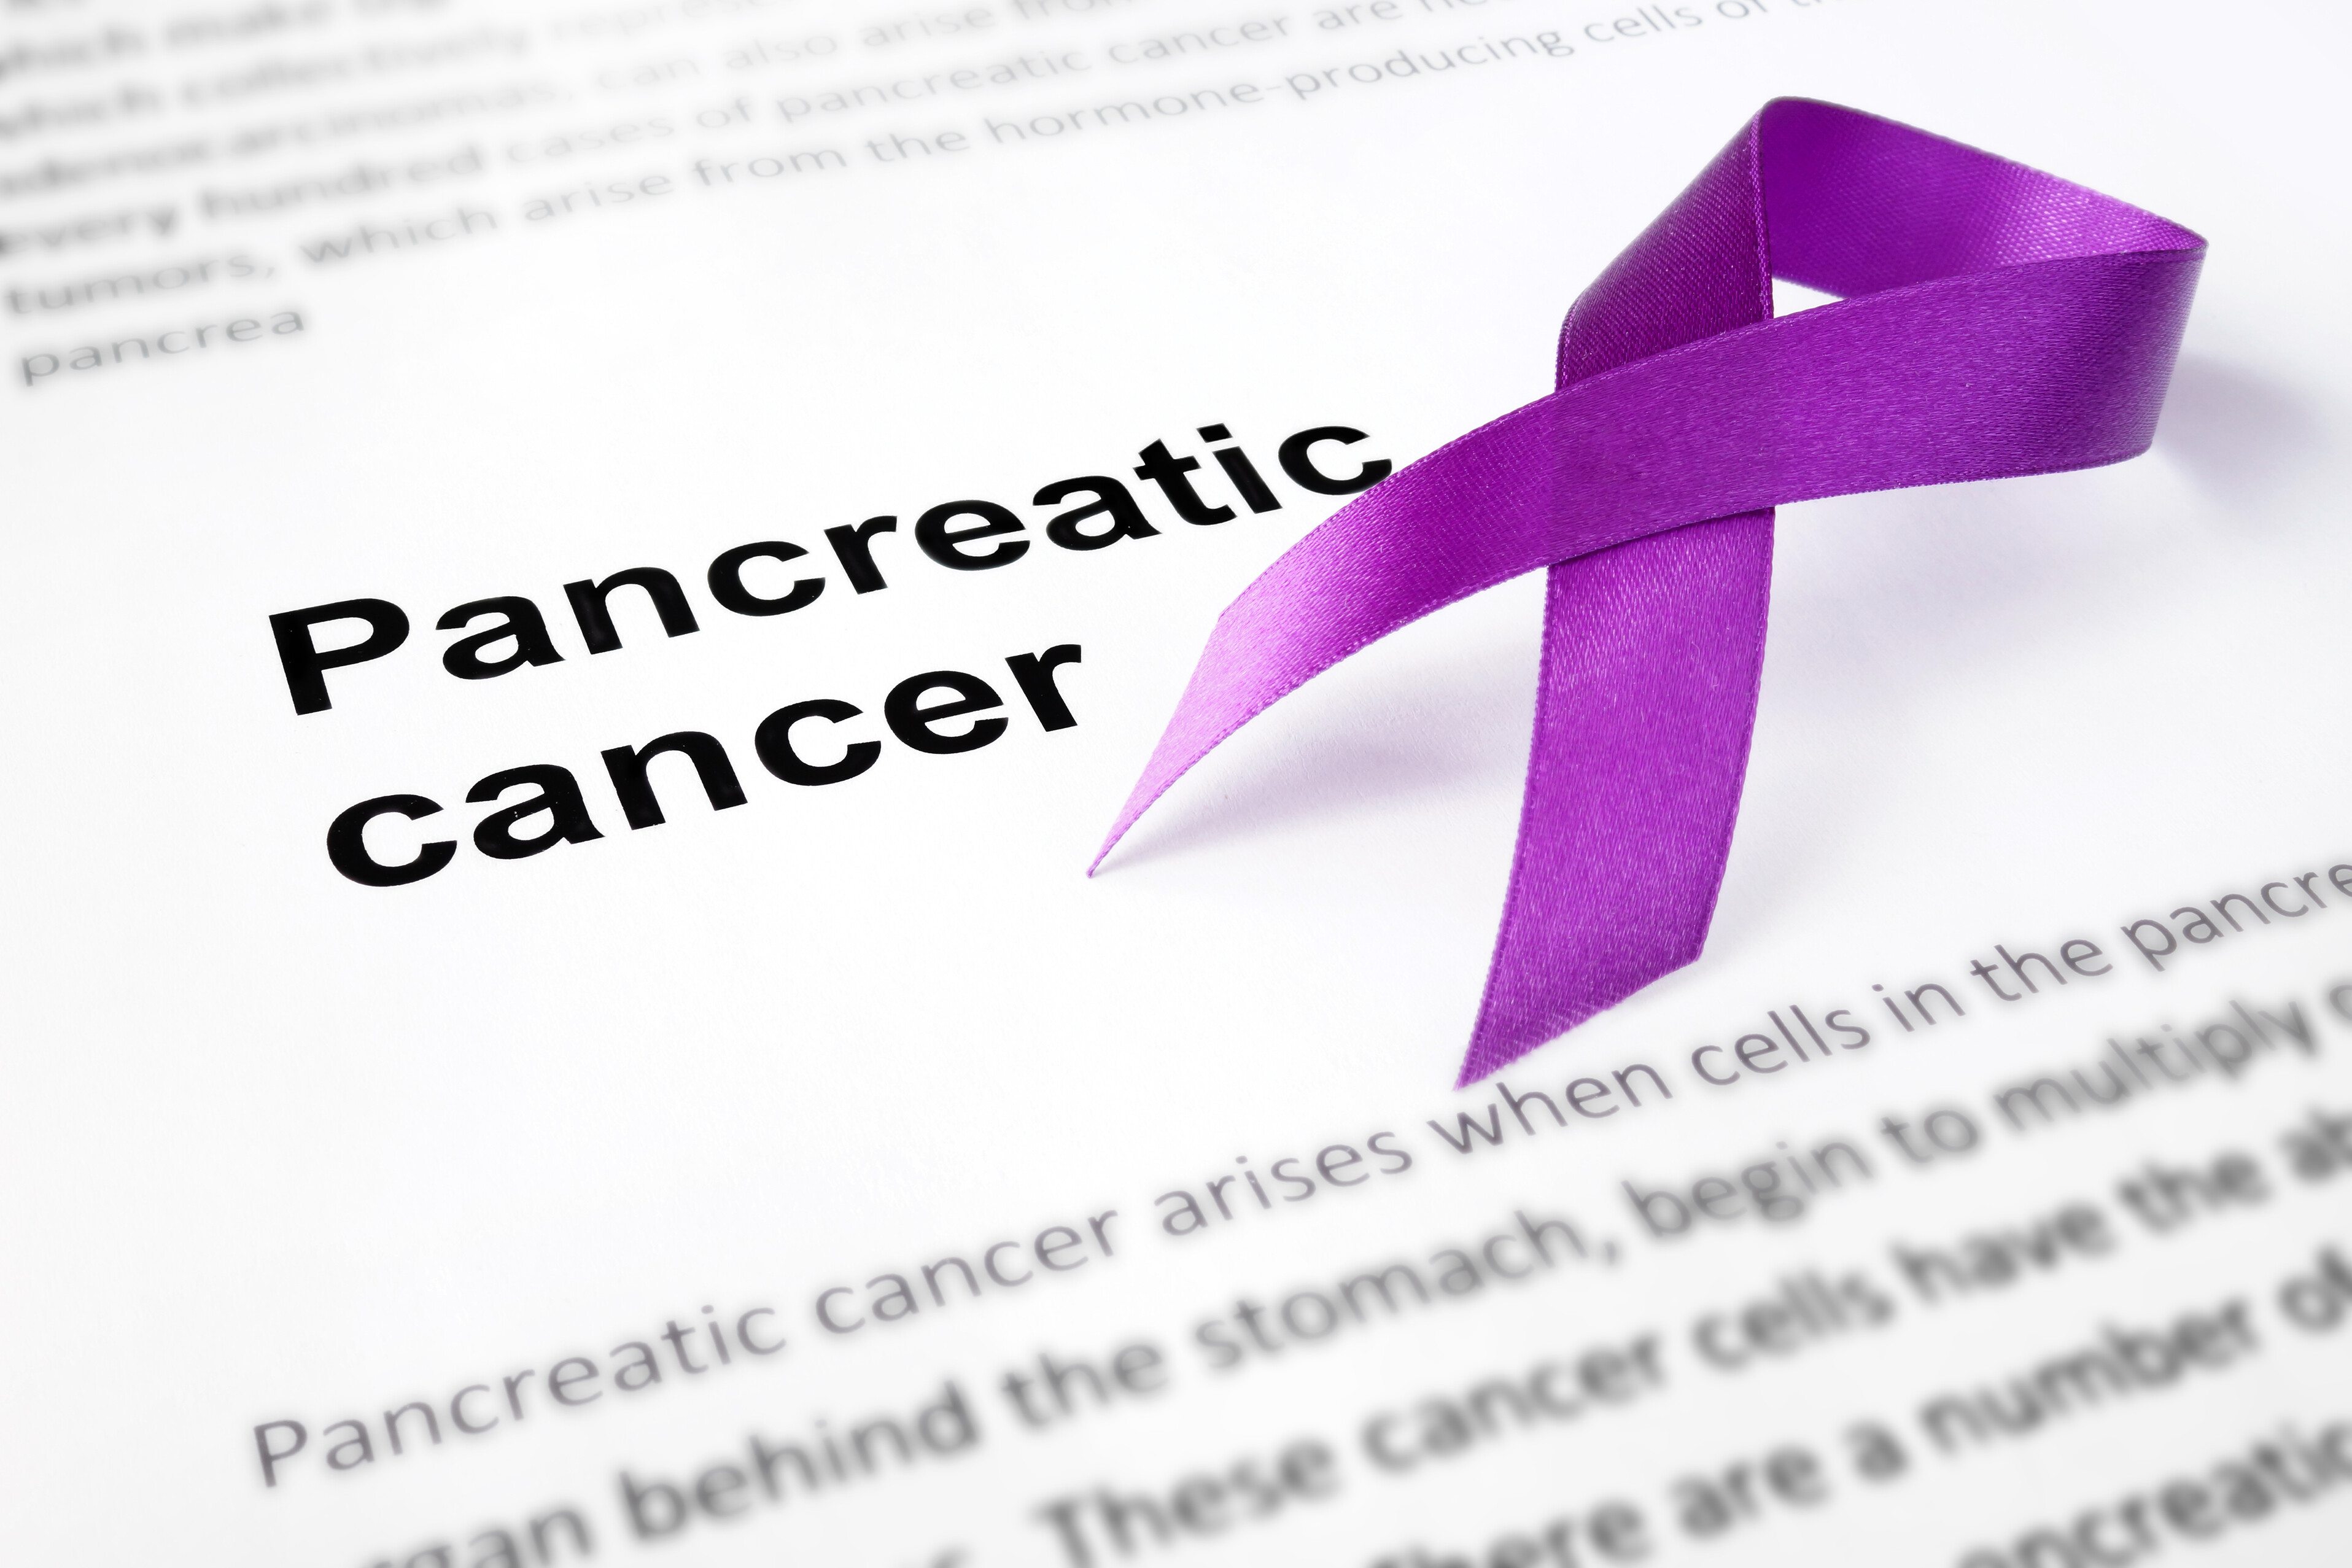 Pancreatic Cancer